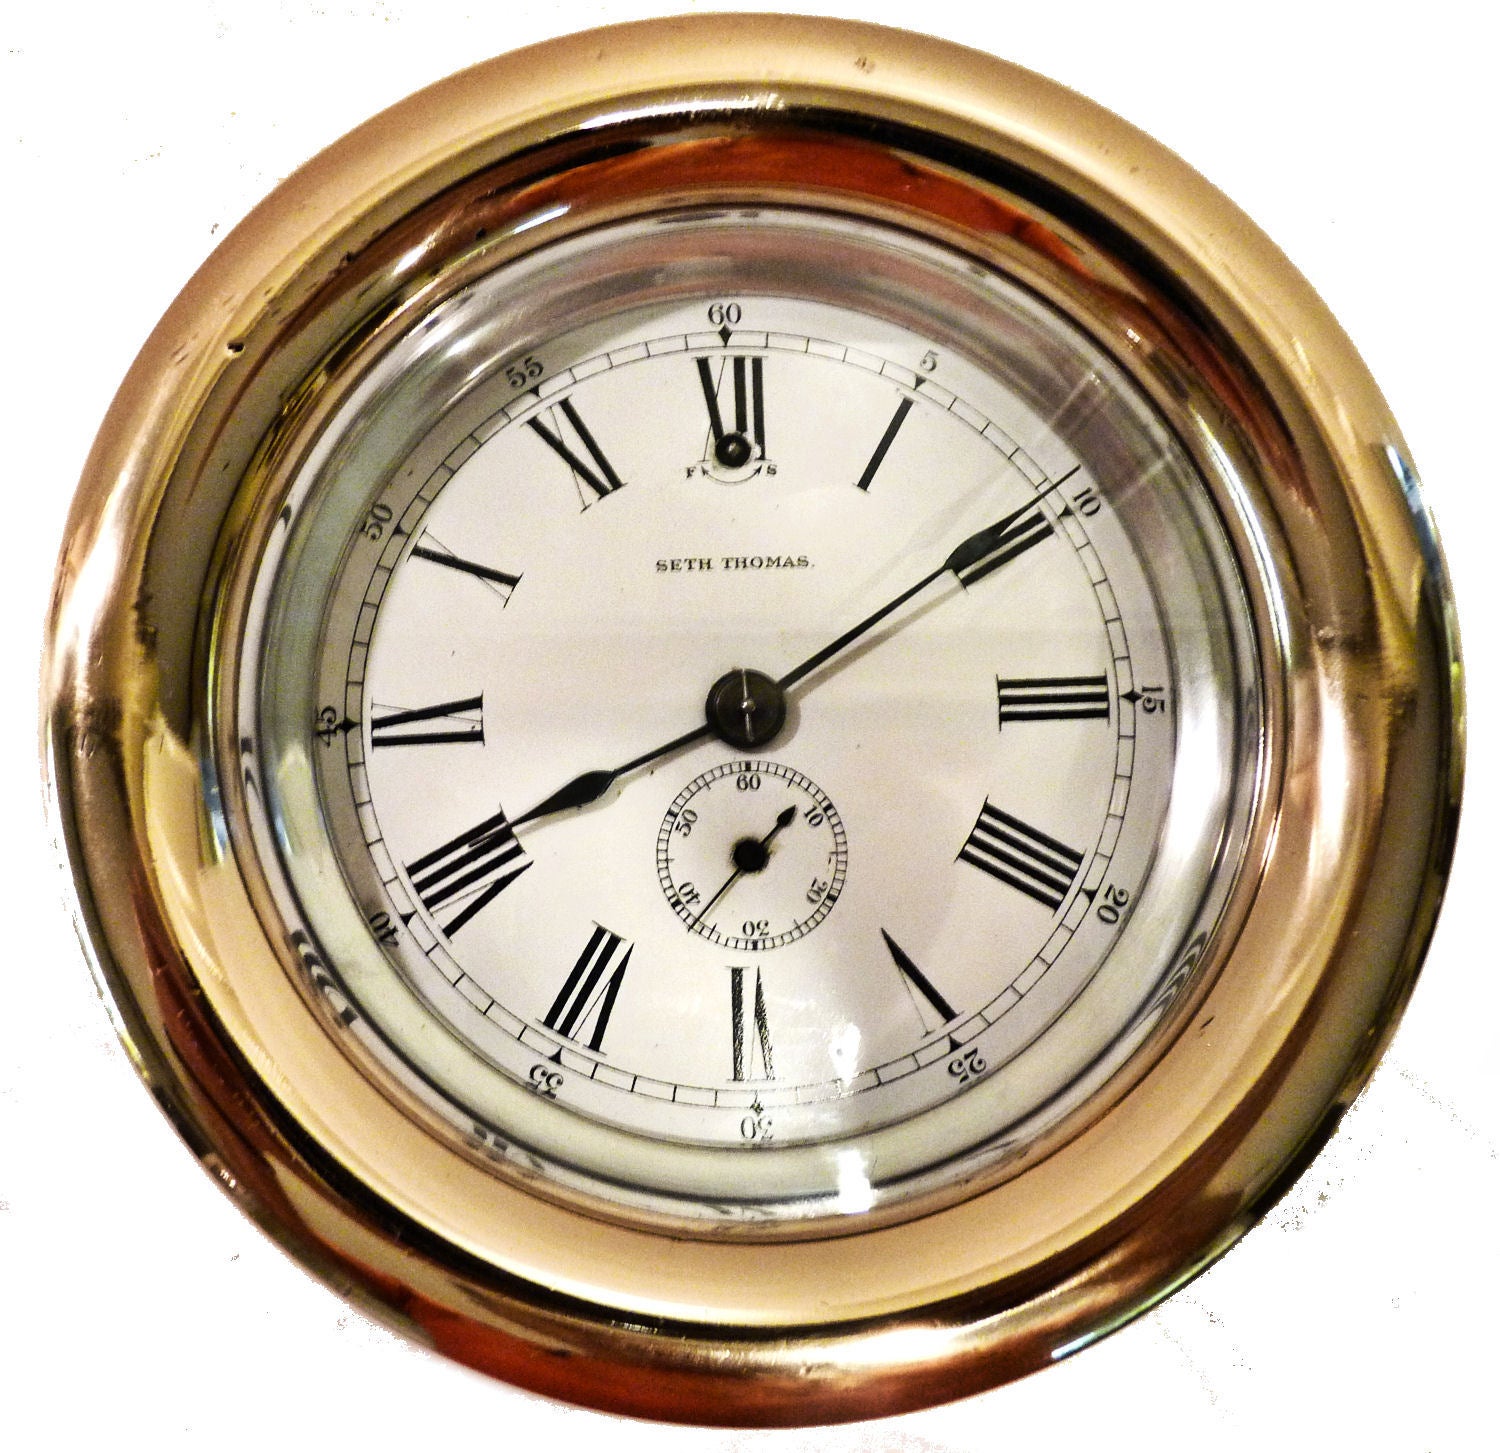 Unique Seth Thomas Side Wind Lever Ships Chronometer For Sale